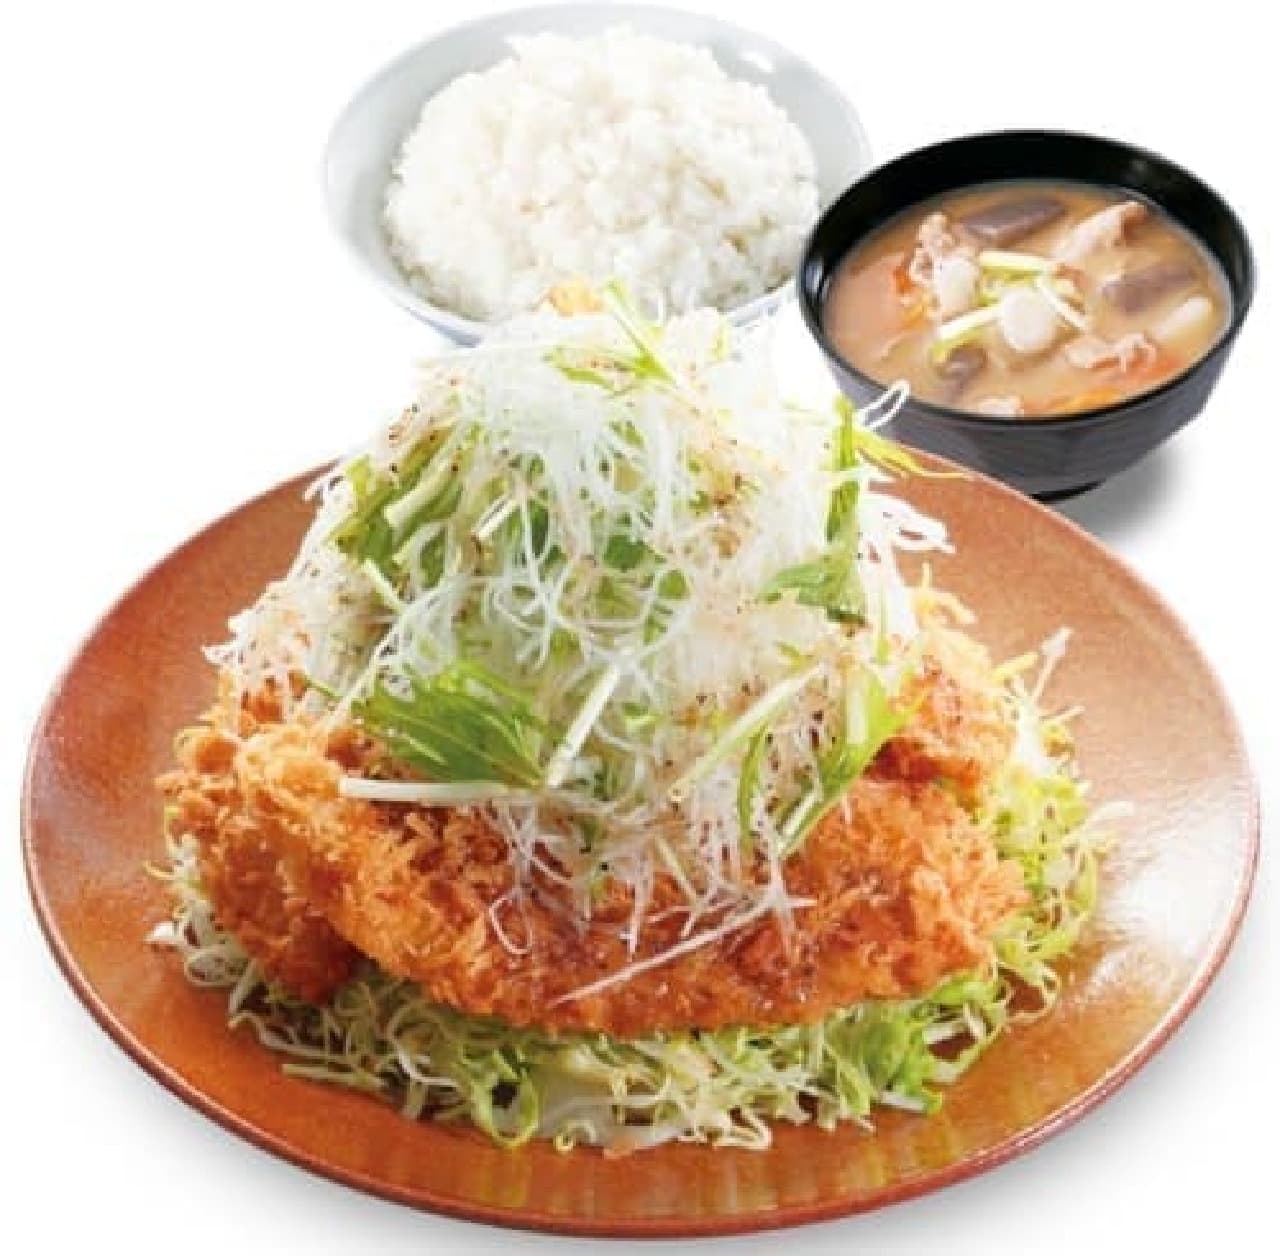 Katsuya "Chicken cutlet set meal with vegetables"